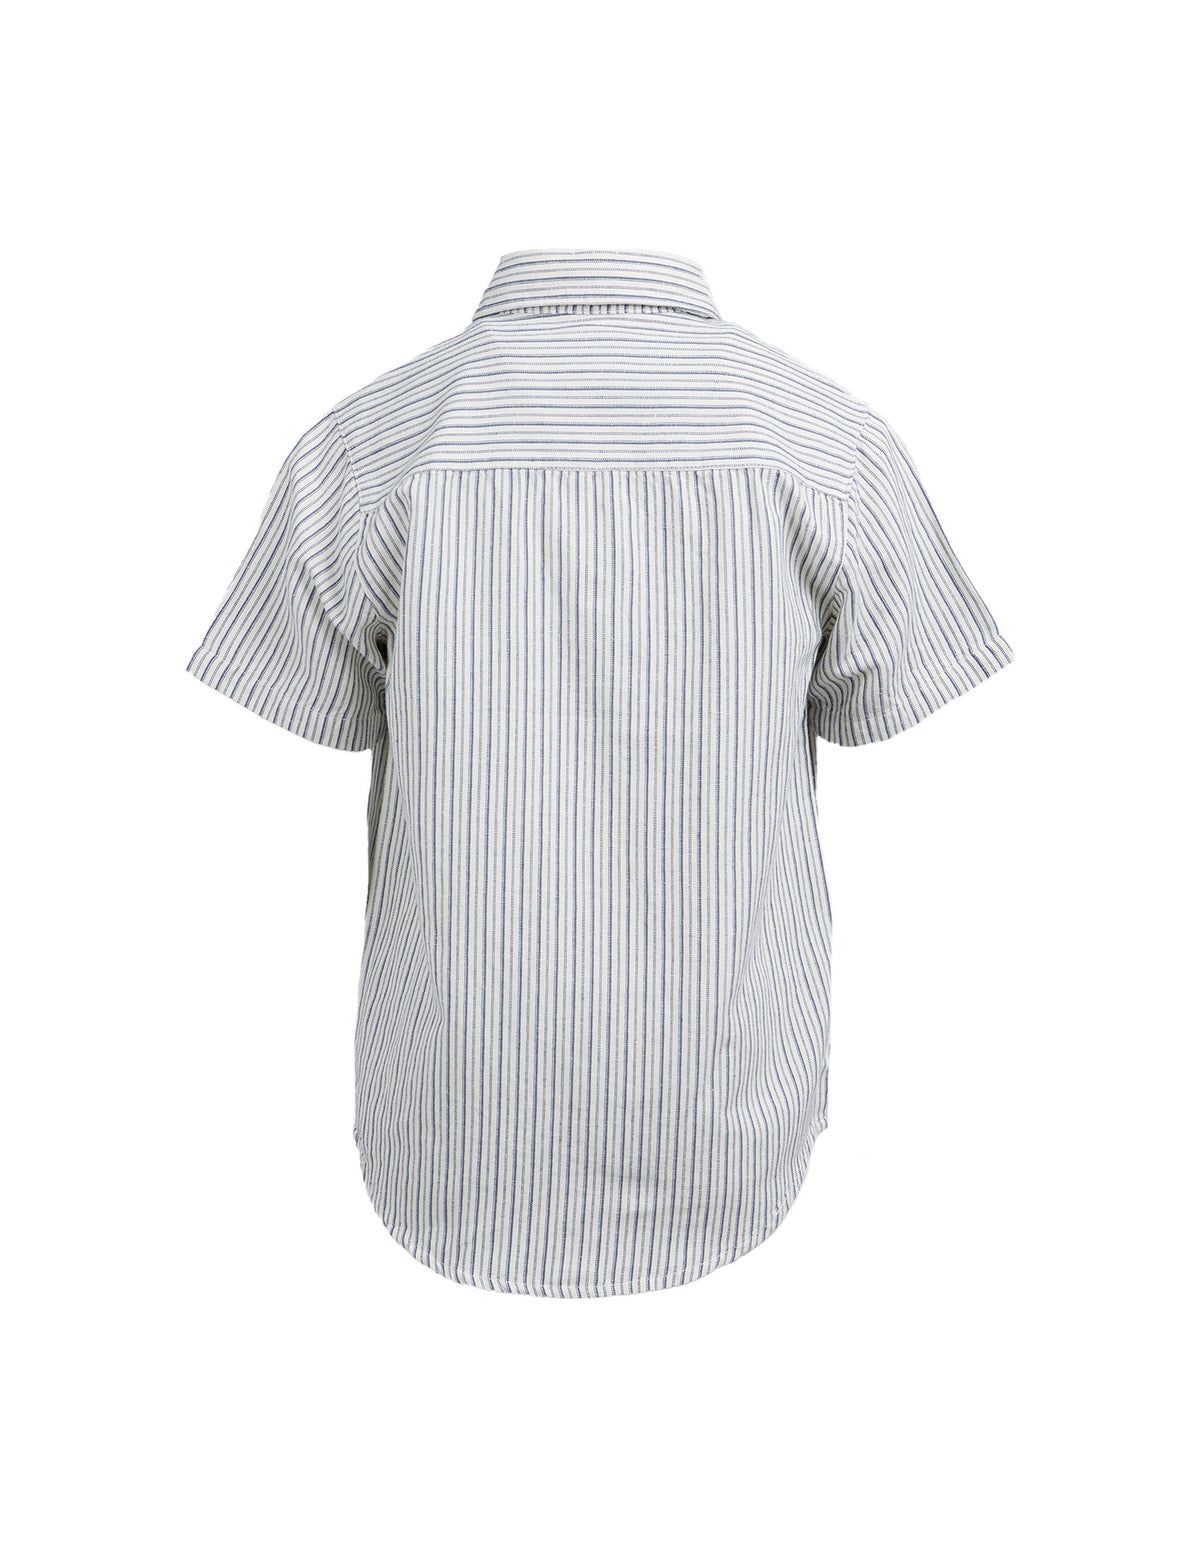 Sunnyville Boys 8-16-Seasons Shirt White-Edge Clothing